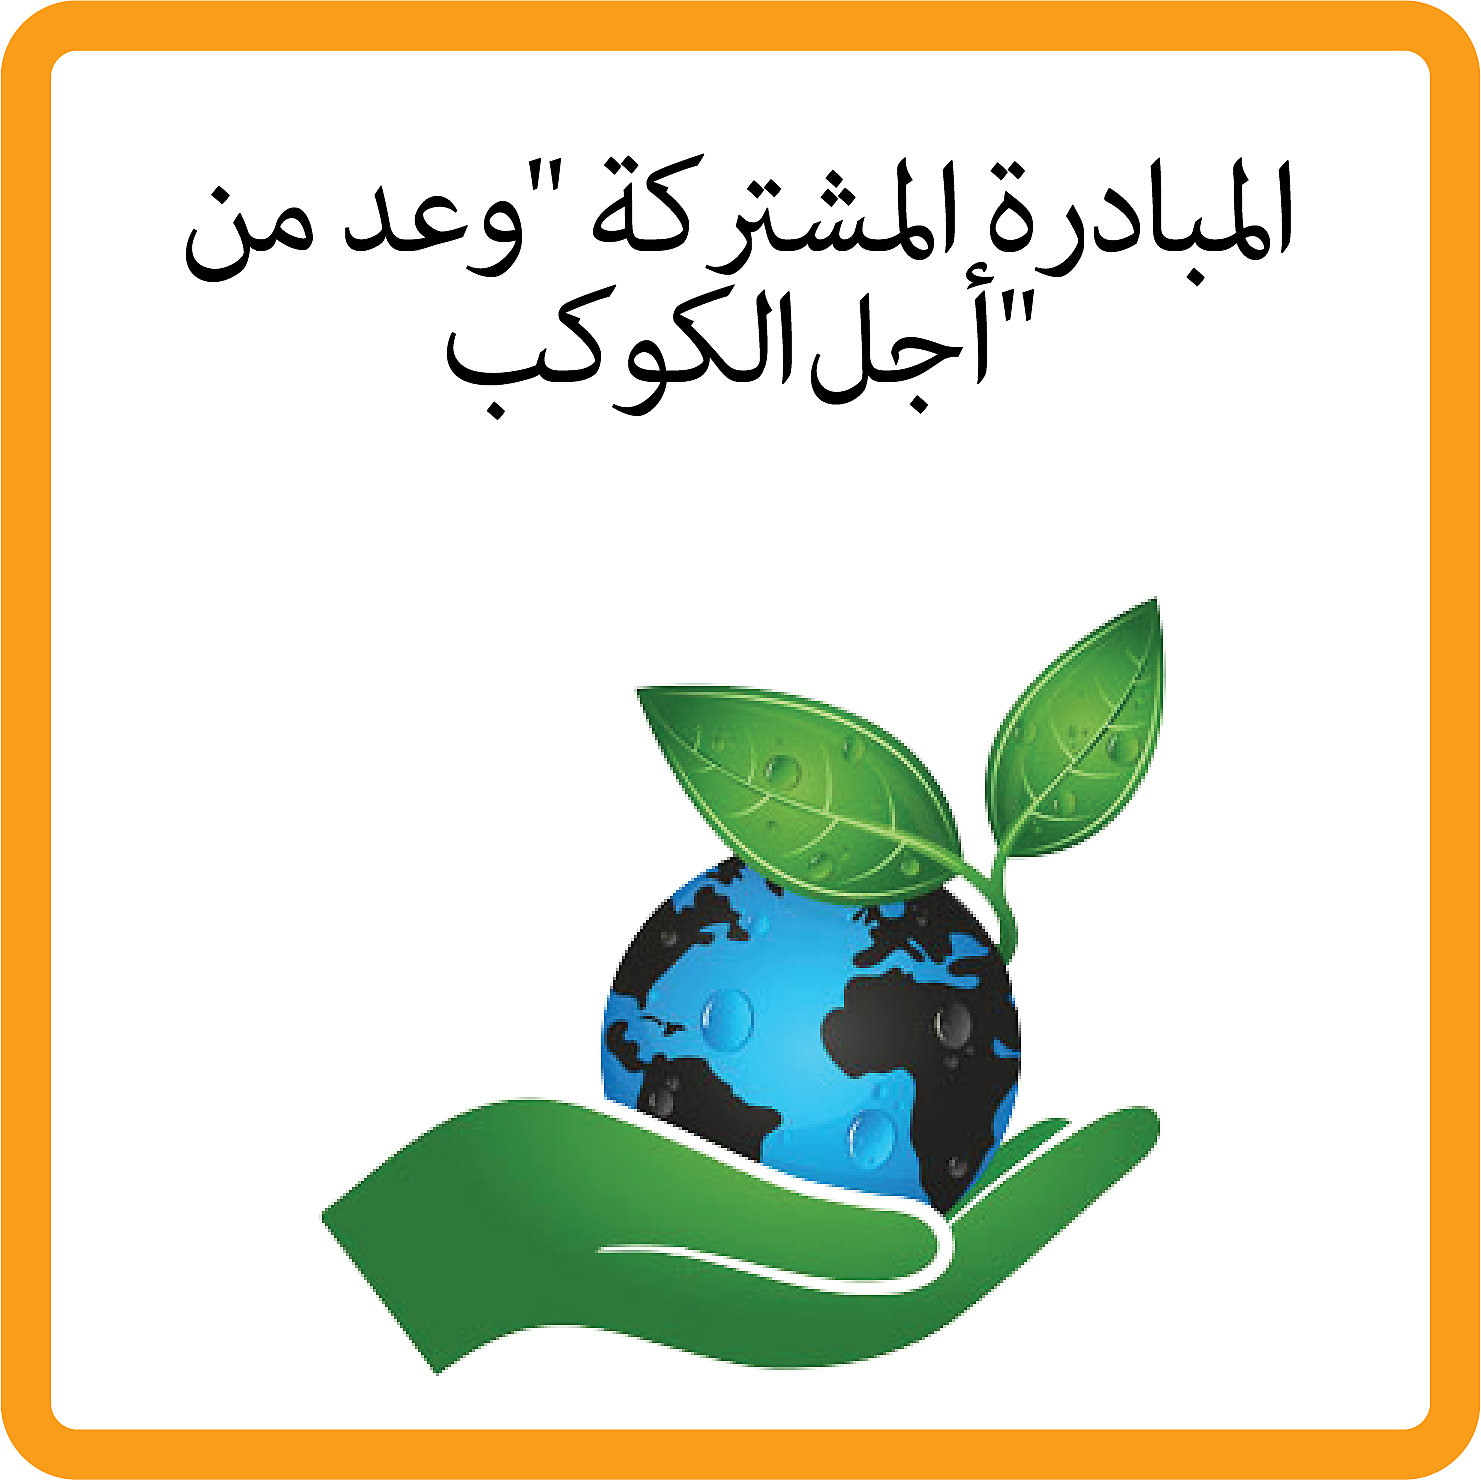 Sustainability planet initiative_B_ARABIC